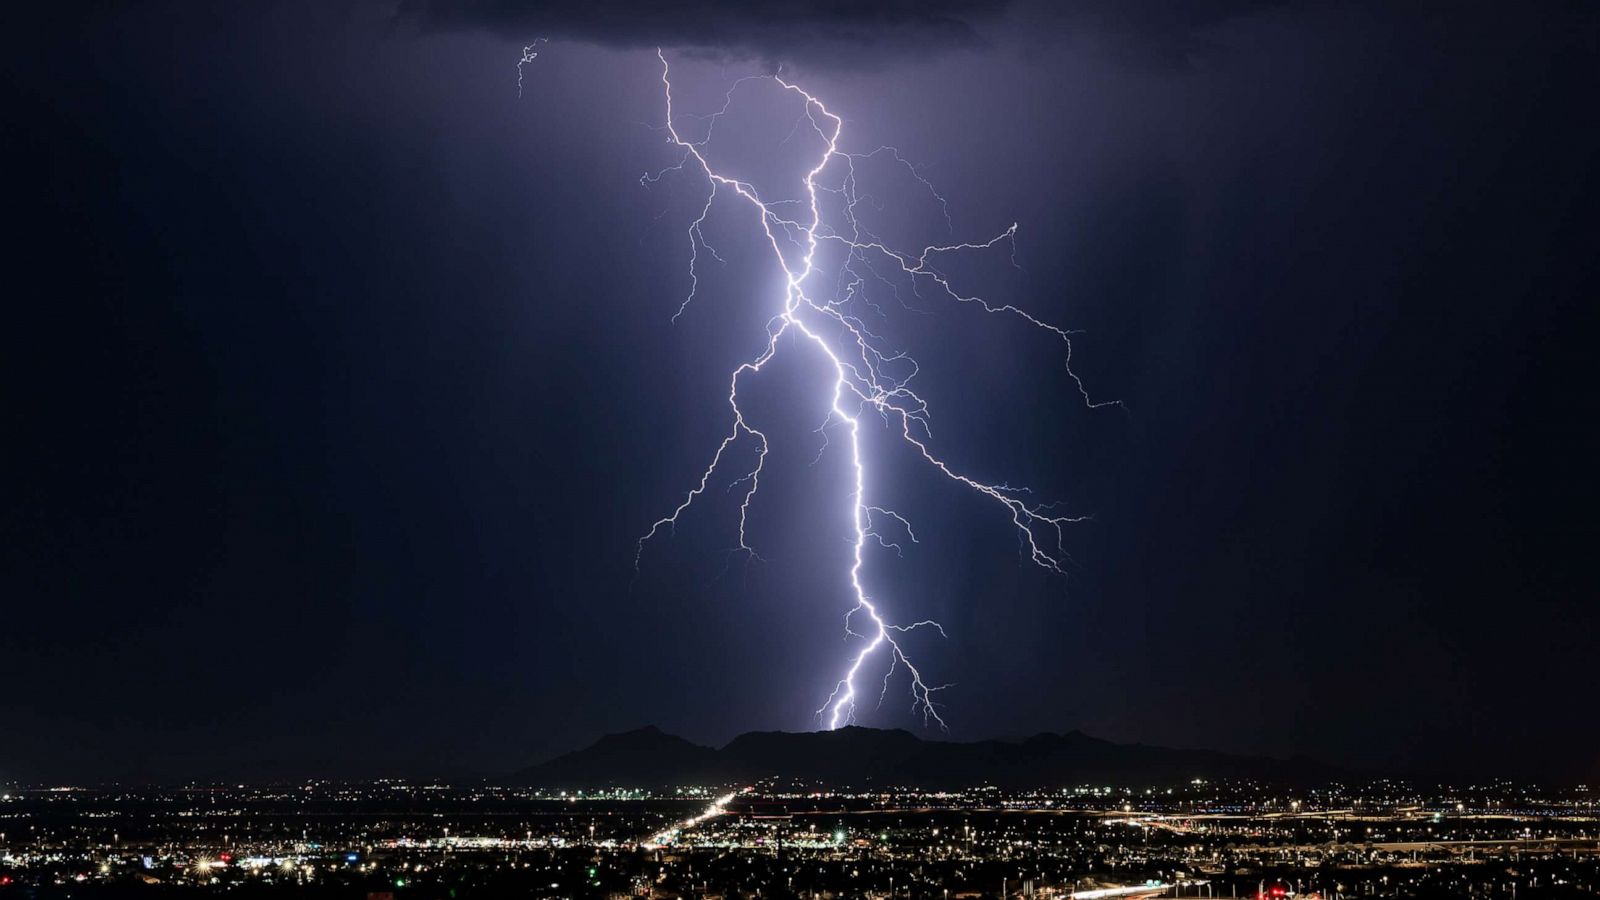 Top tips to avoid lightning strikes - ABC News